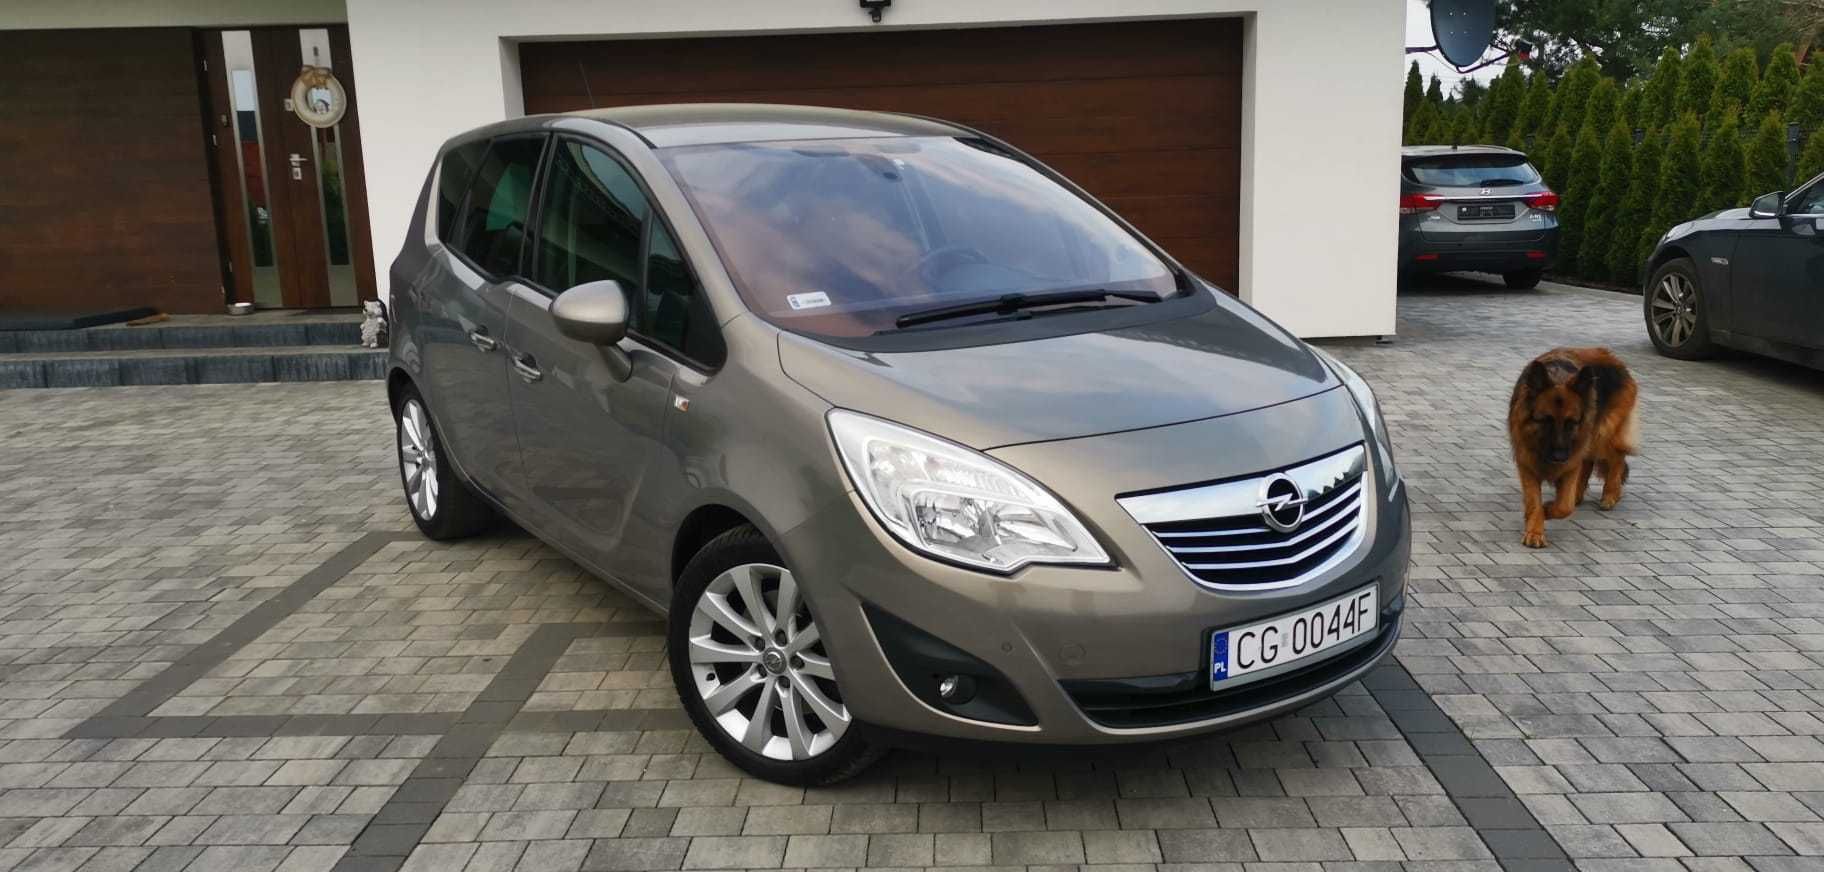 Opel Meriva 1.4 benzyna 140KM rej. 2011 BARDZO zadbany